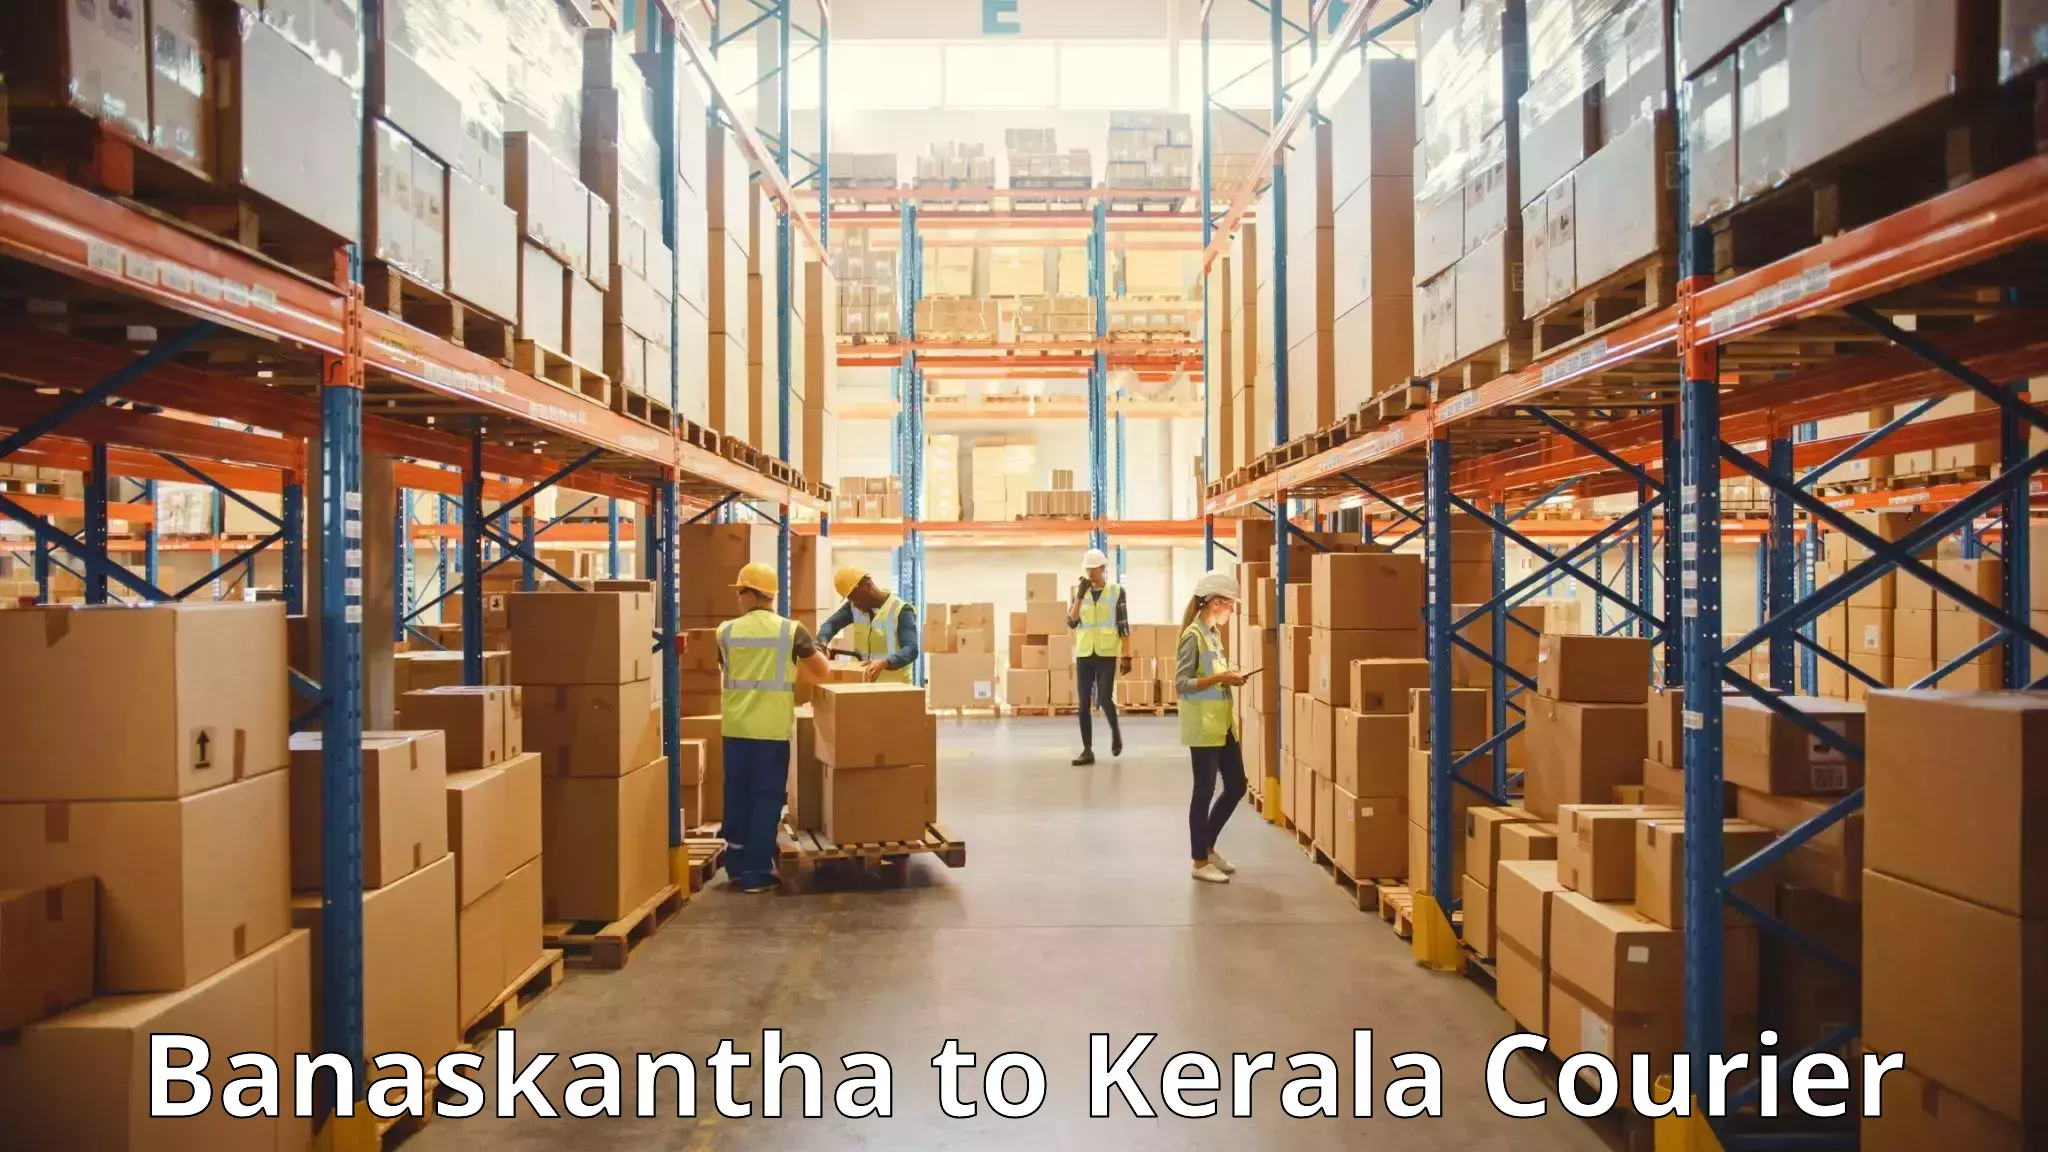 Luggage transport company Banaskantha to Kattappana